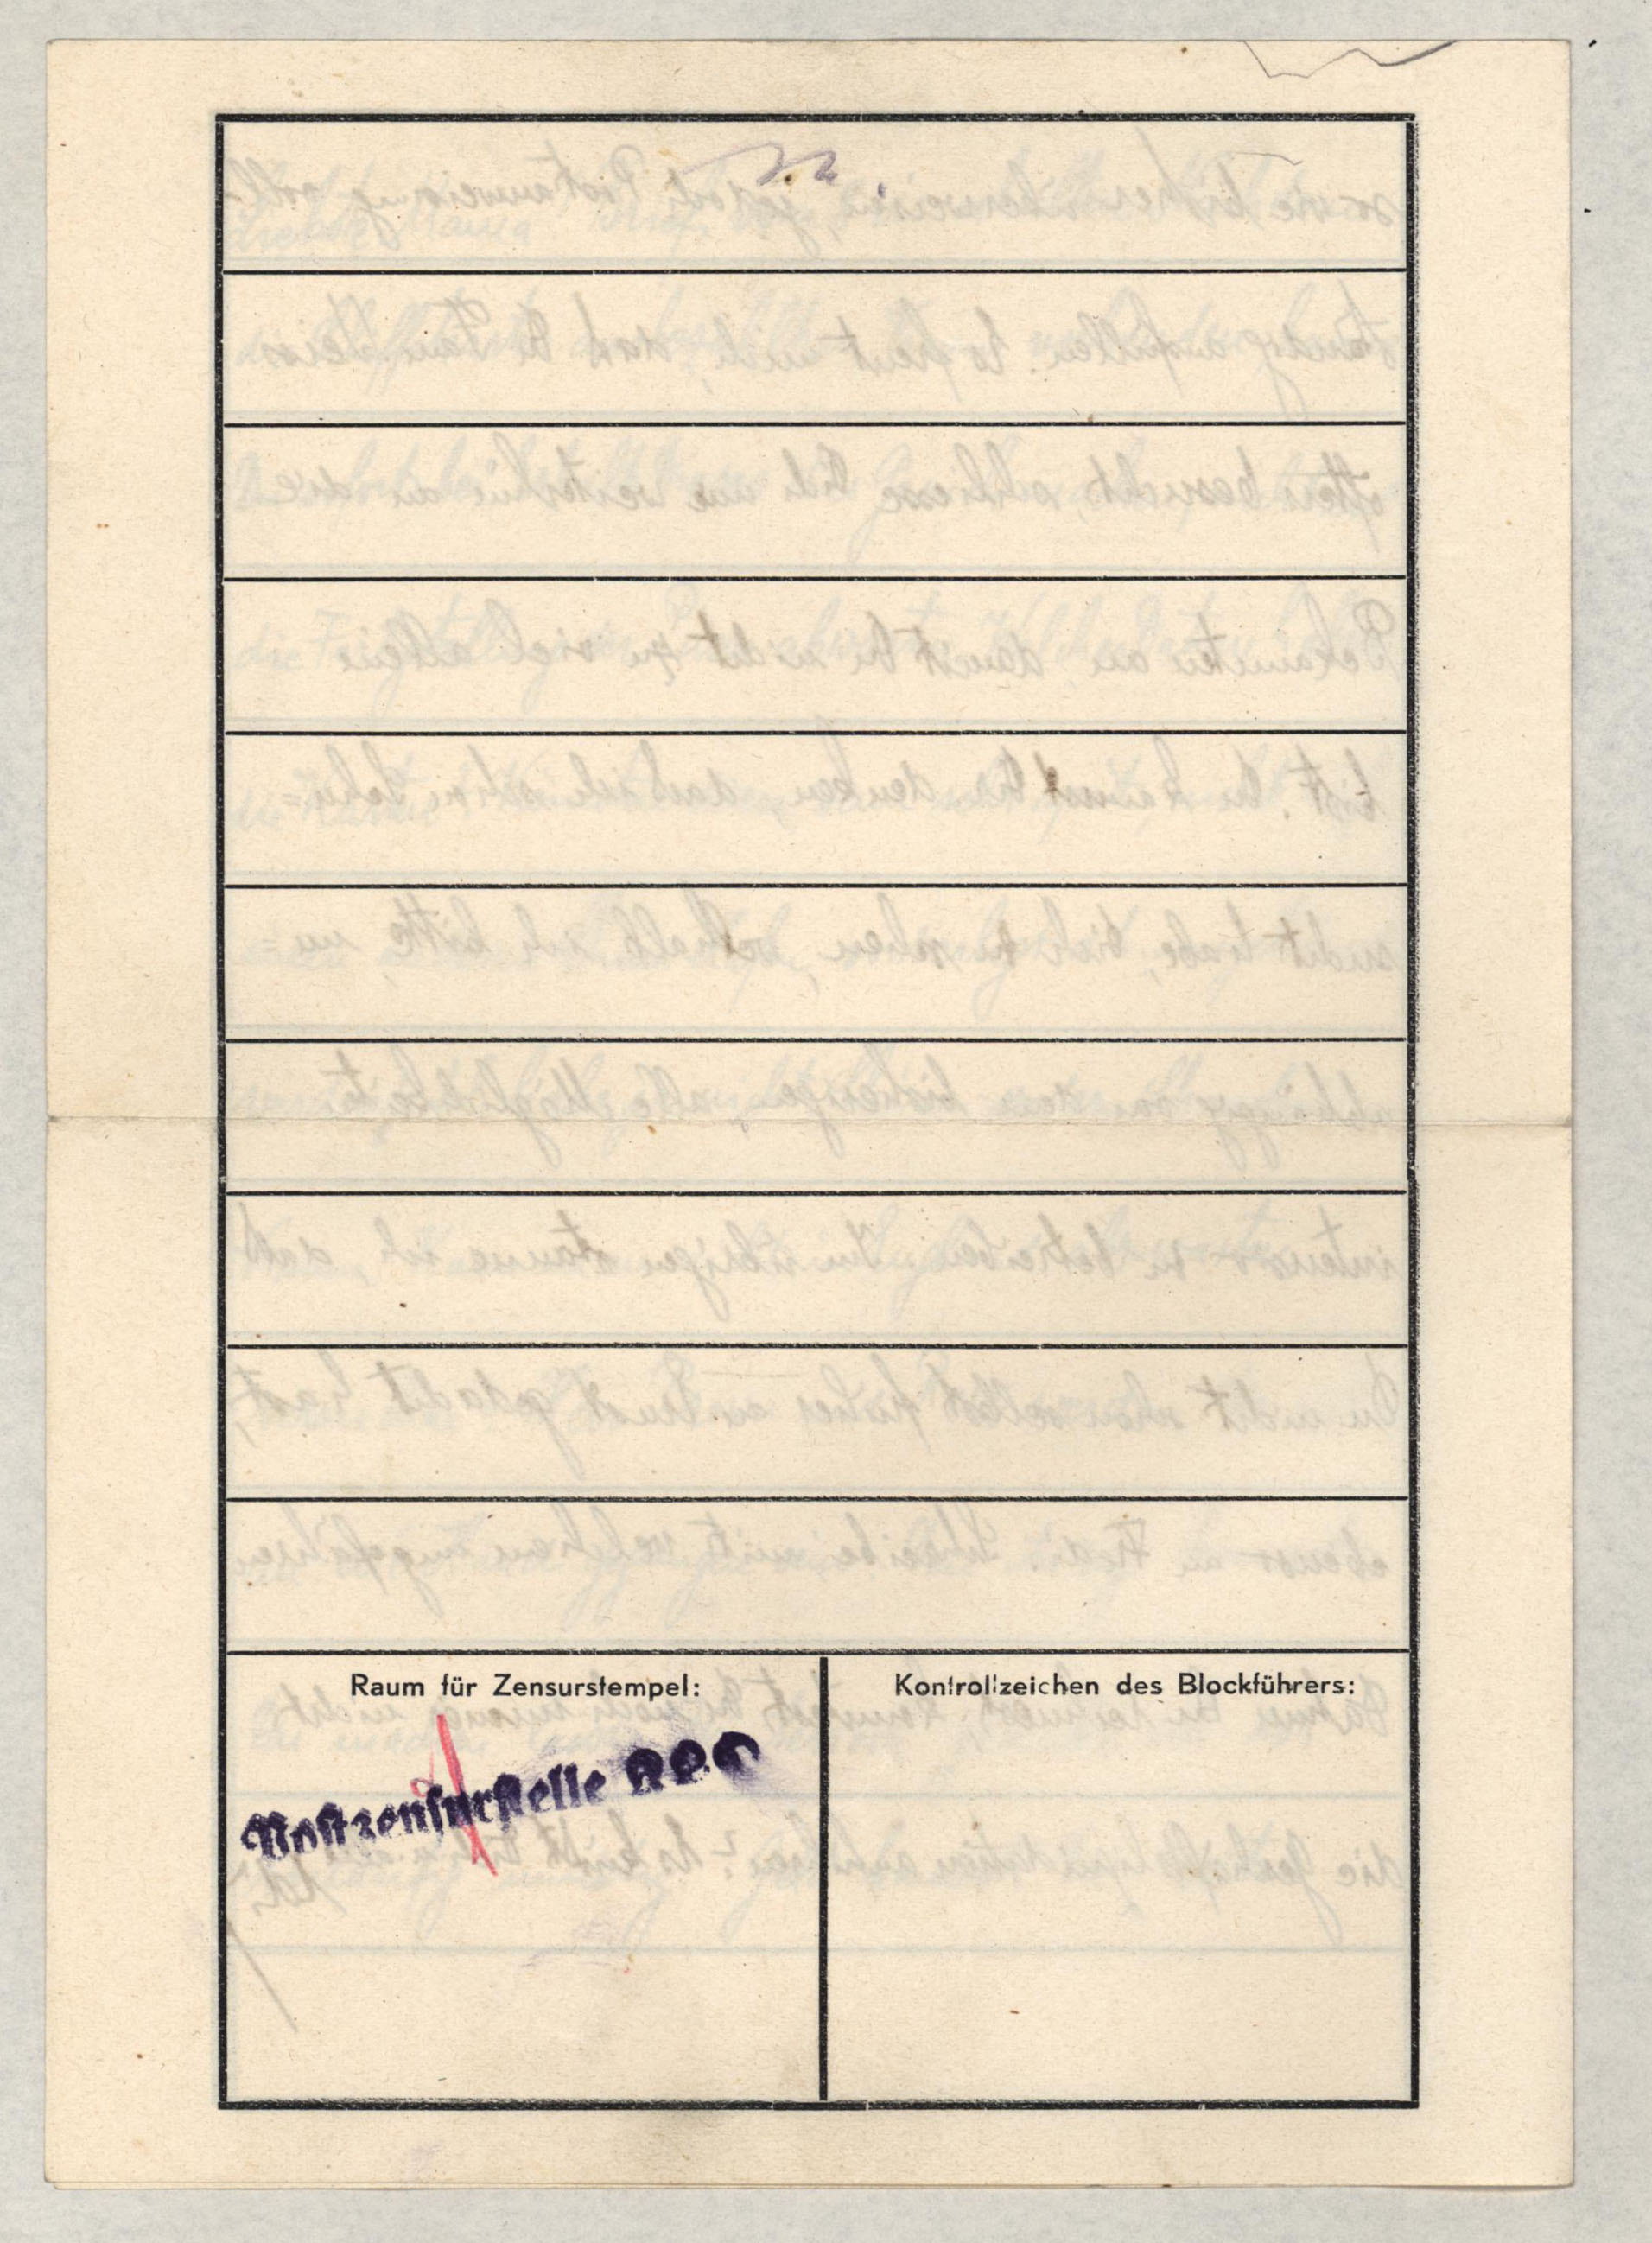 Eduard Elias, Dachau letter, 13 February 1939_003